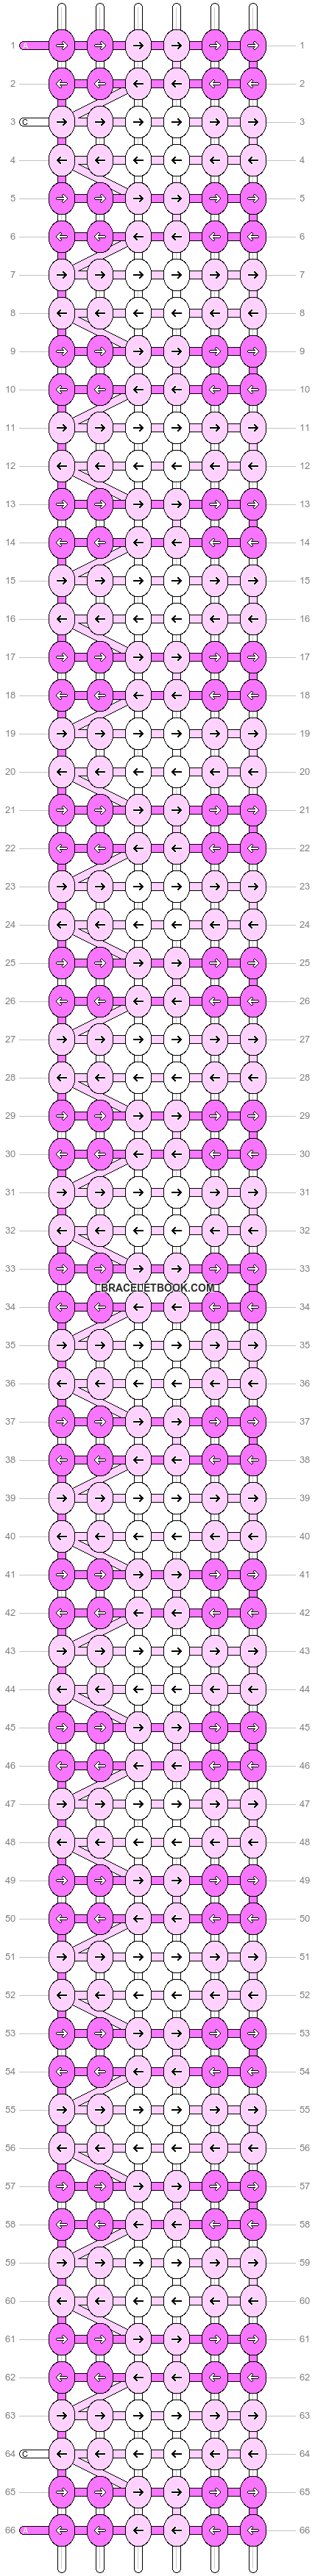 Alpha pattern #80755 variation #146831 pattern